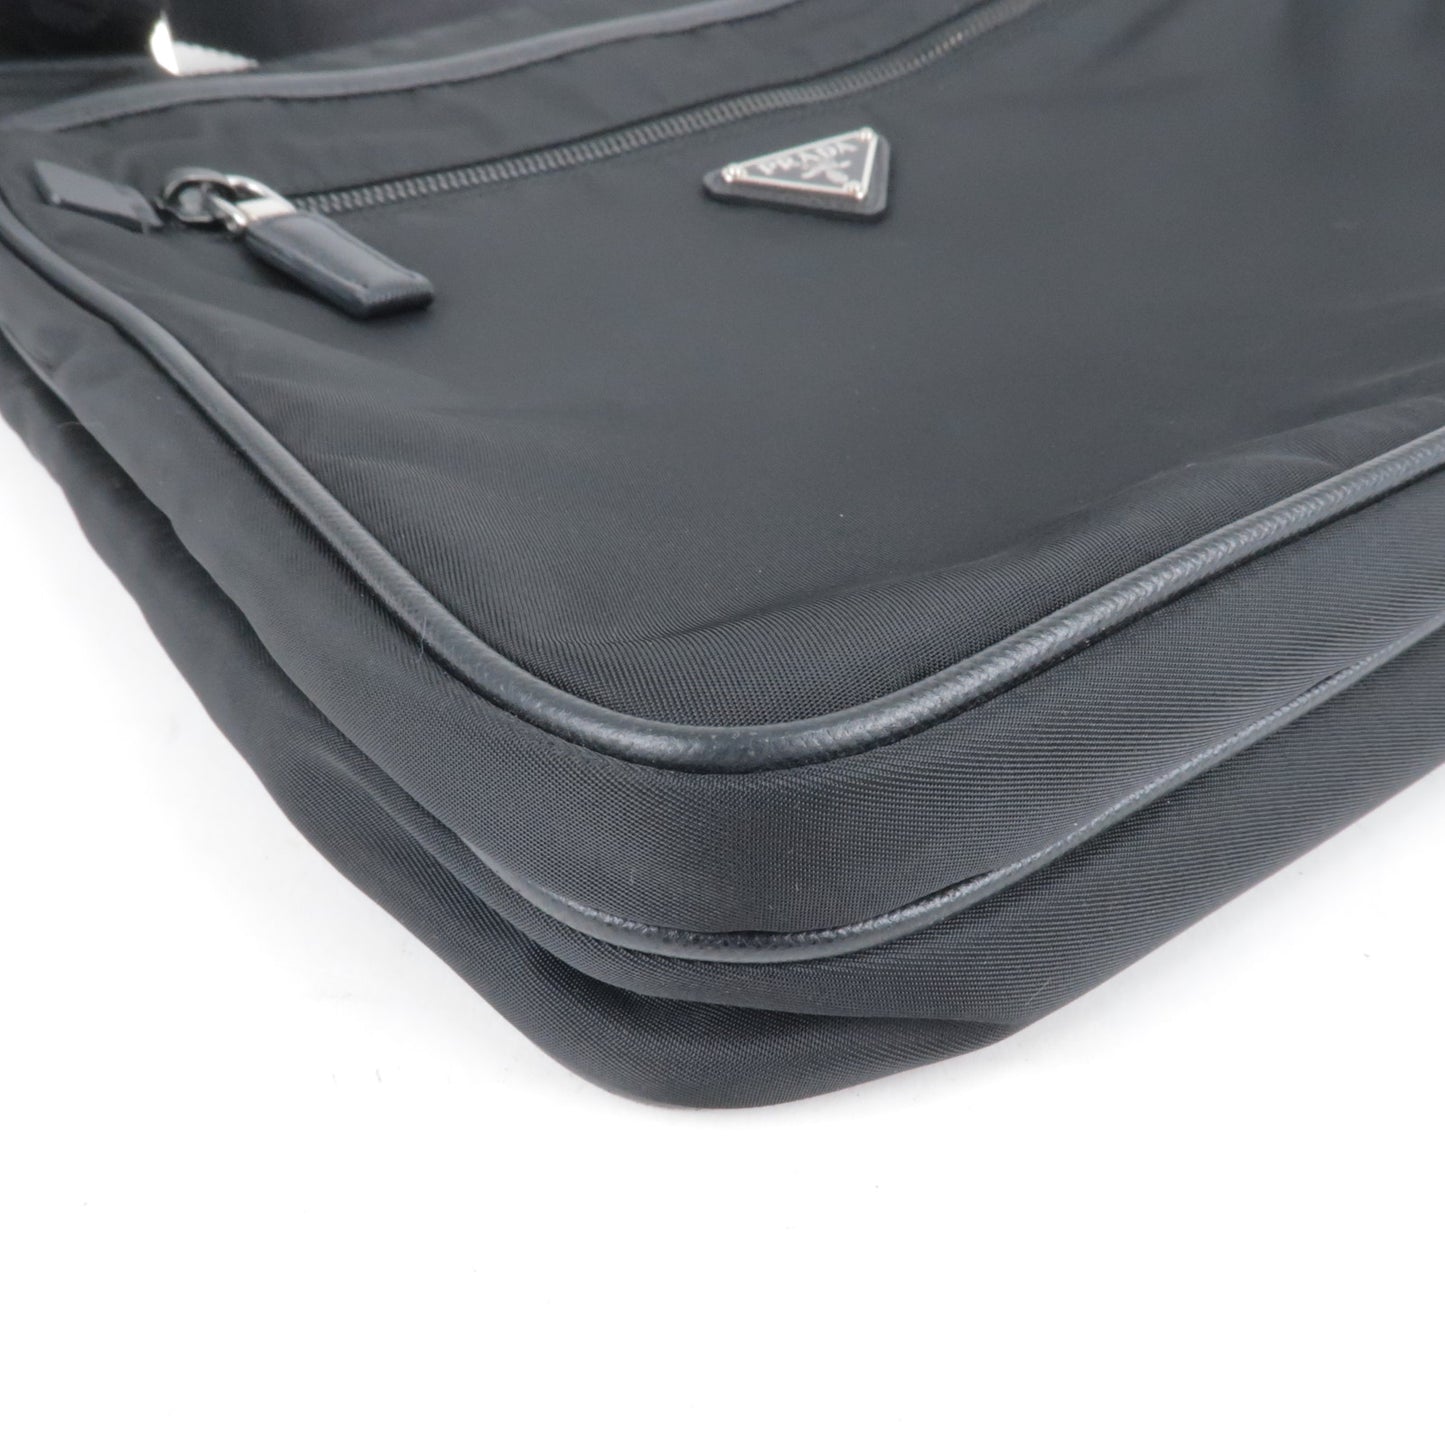 PRADA Logo Nylon Leather Shoulder Bag Purse NERO Black